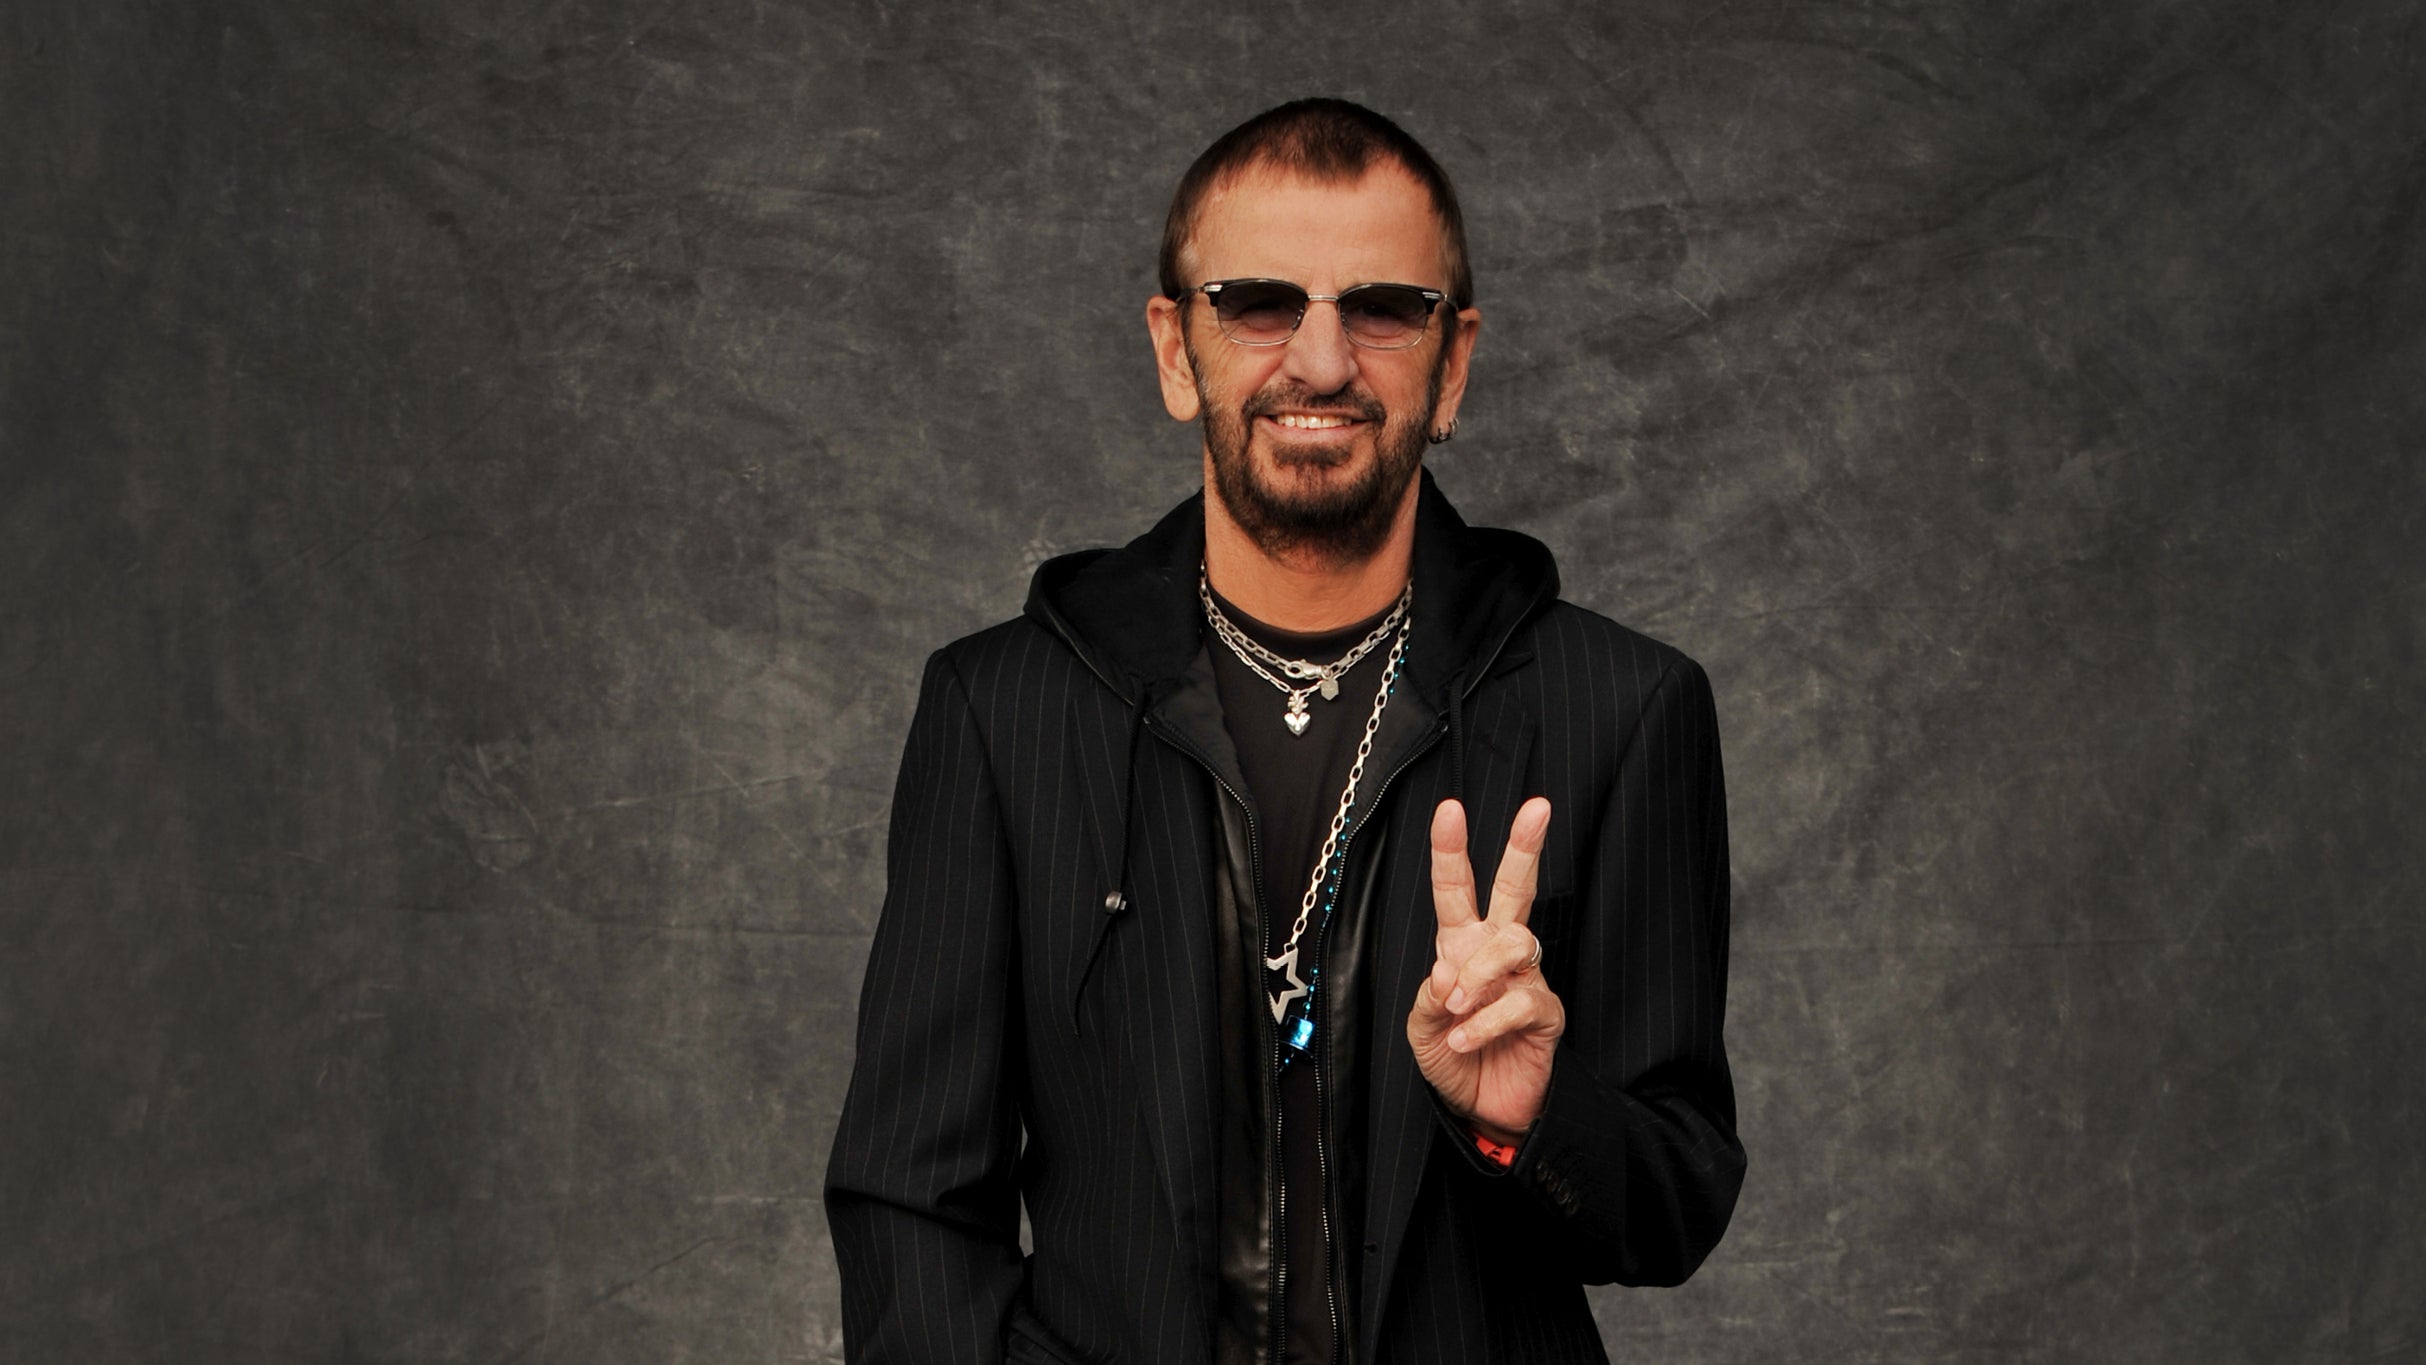 Ringo Starr in New York promo photo for VIP Package presale offer code